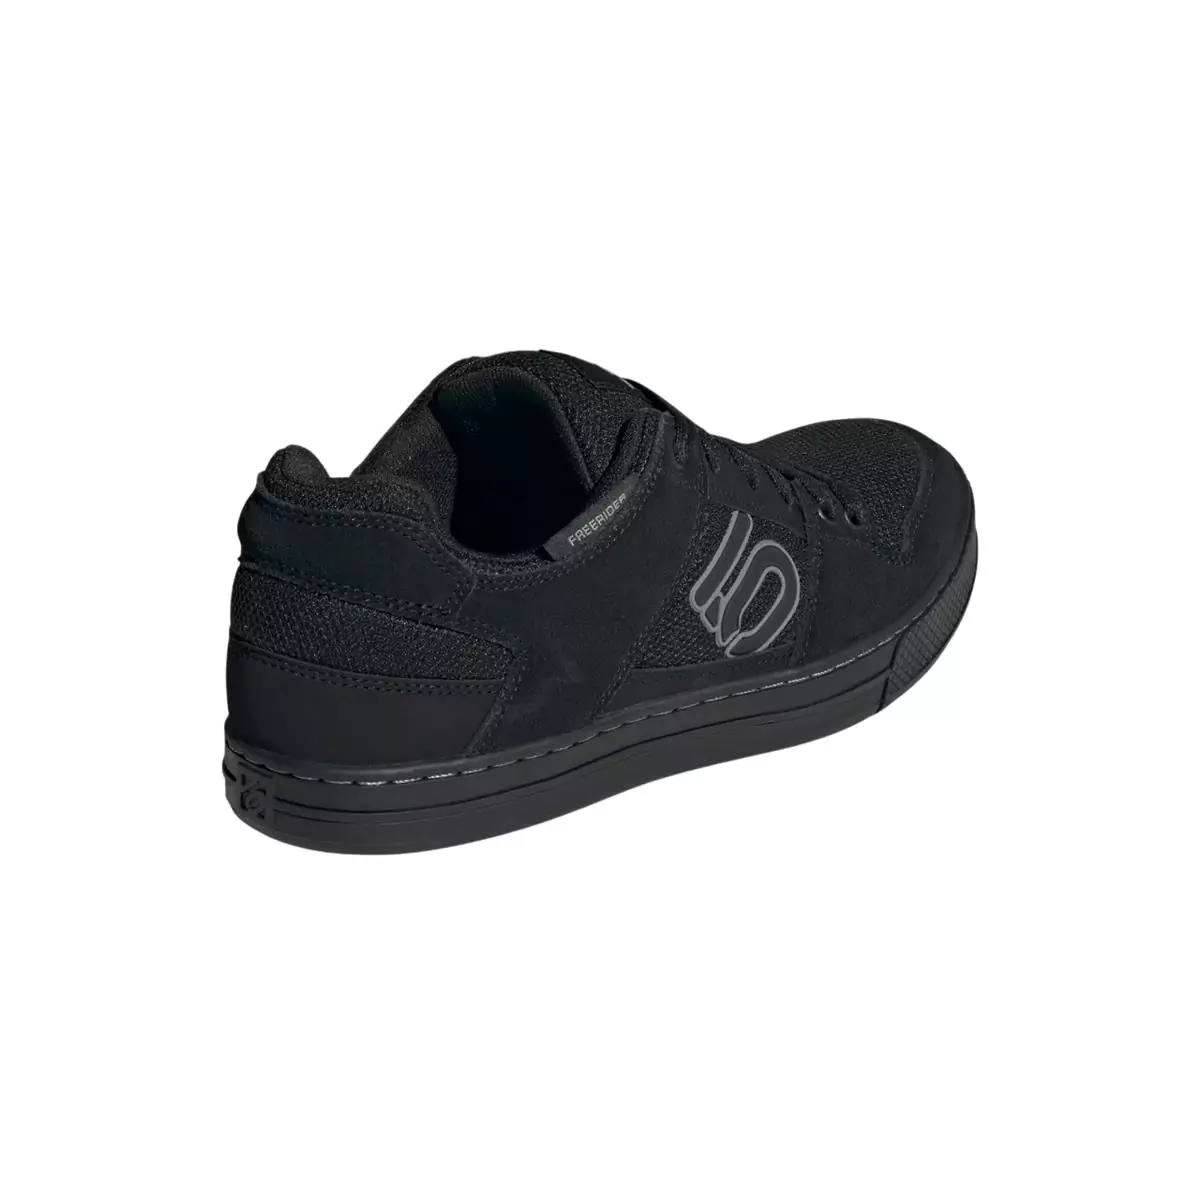 MTB Shoes Flat Freerider Black Size 44 #5